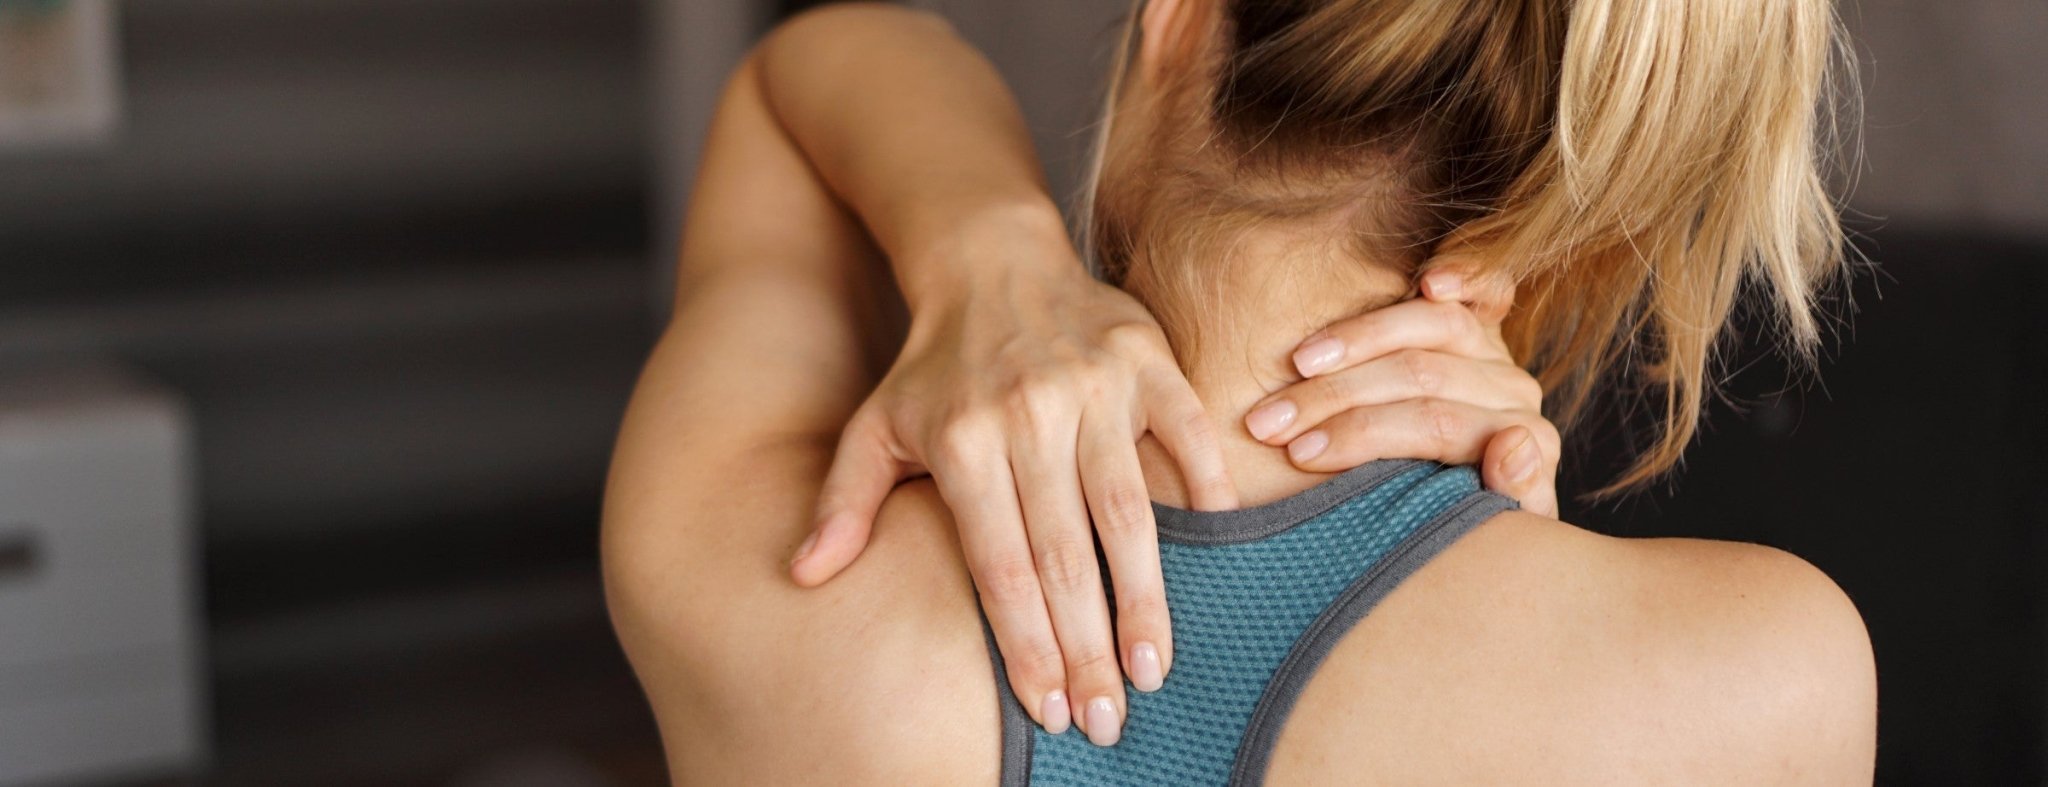 Sillones de masaje para deportistas activos | Massage chair world